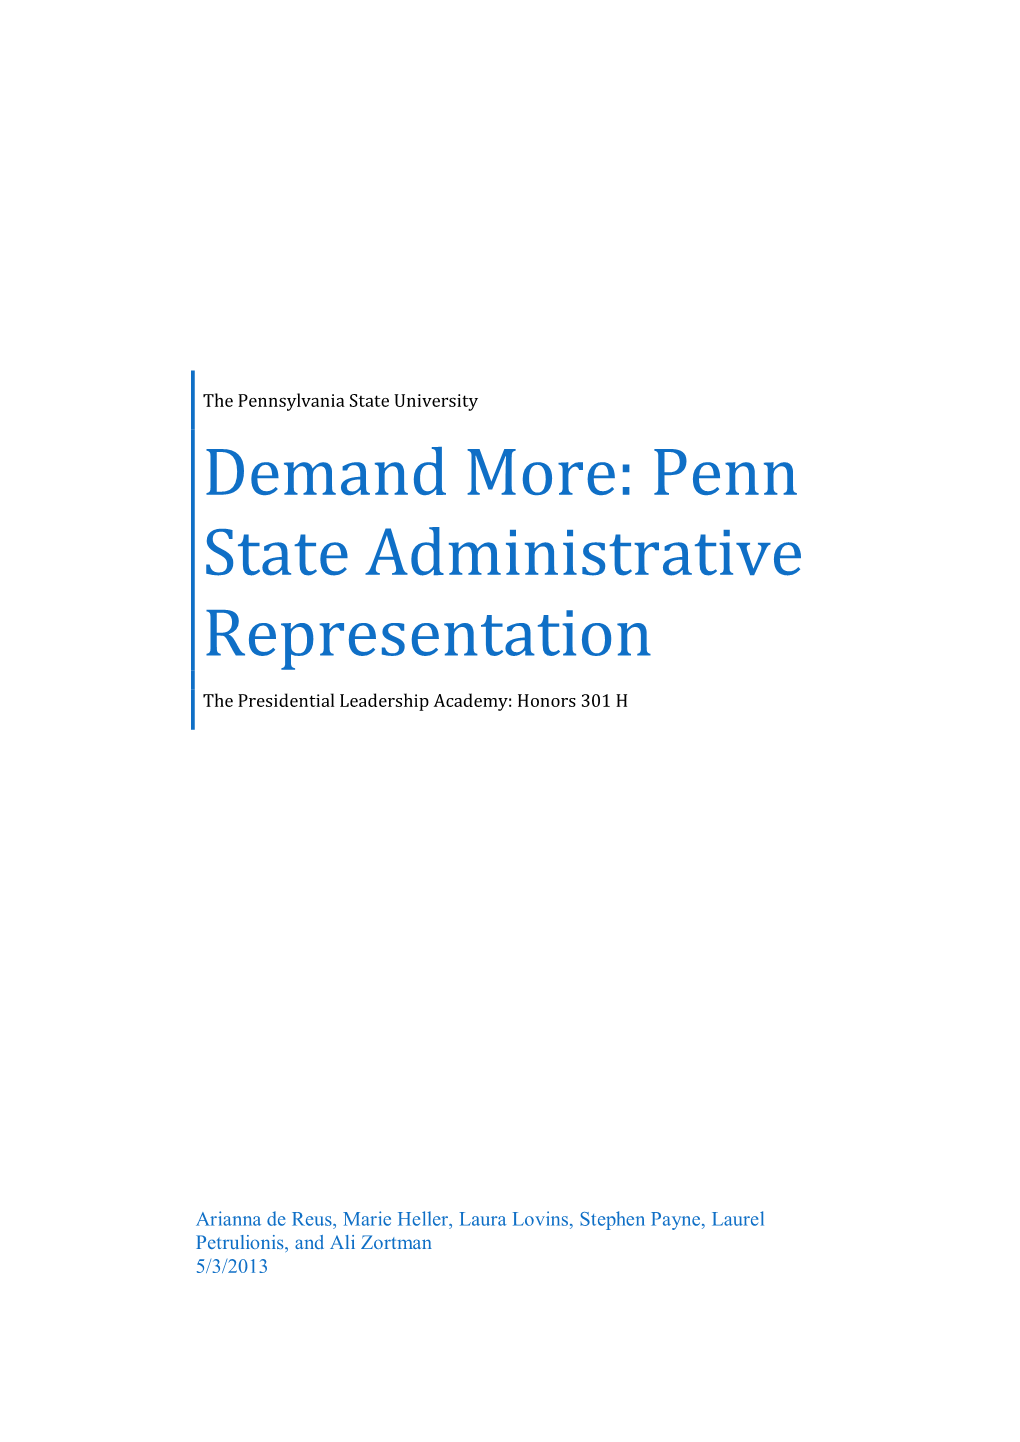 Penn State Administrative Representation